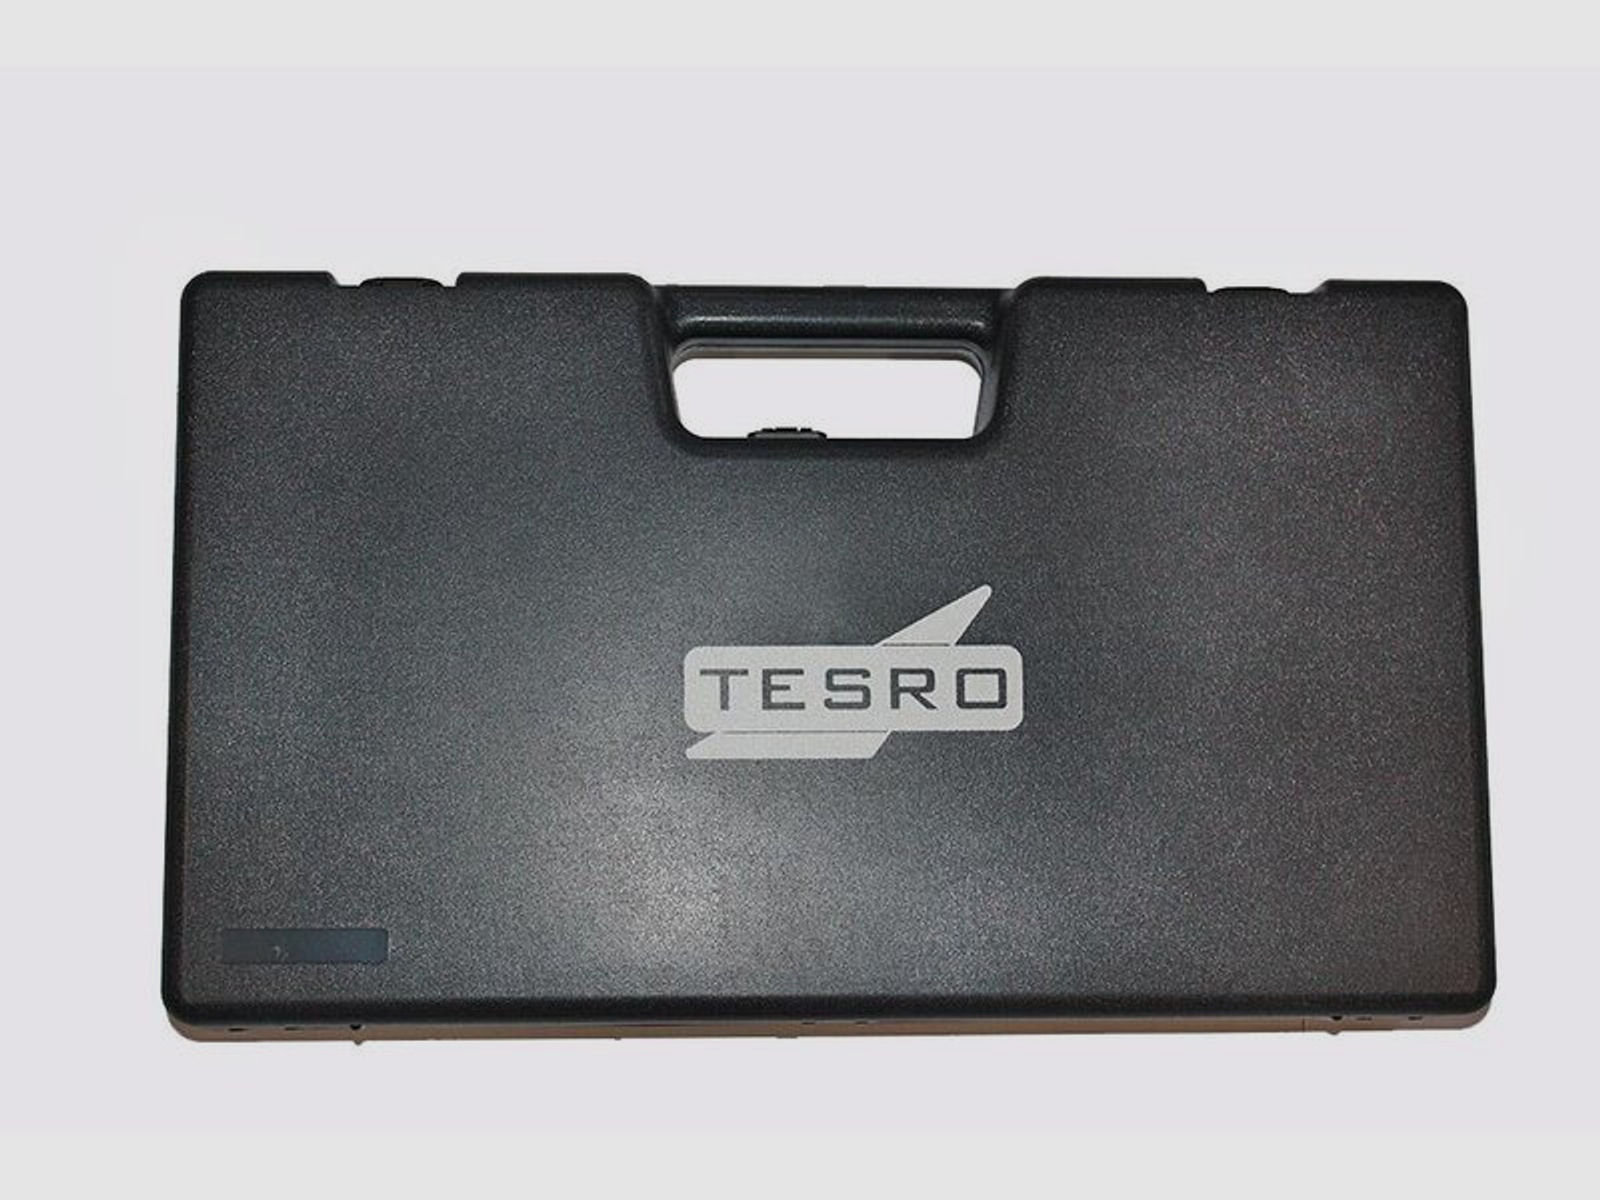 Tesro Match Luftpistole PA 10-2 Basic - Auflage